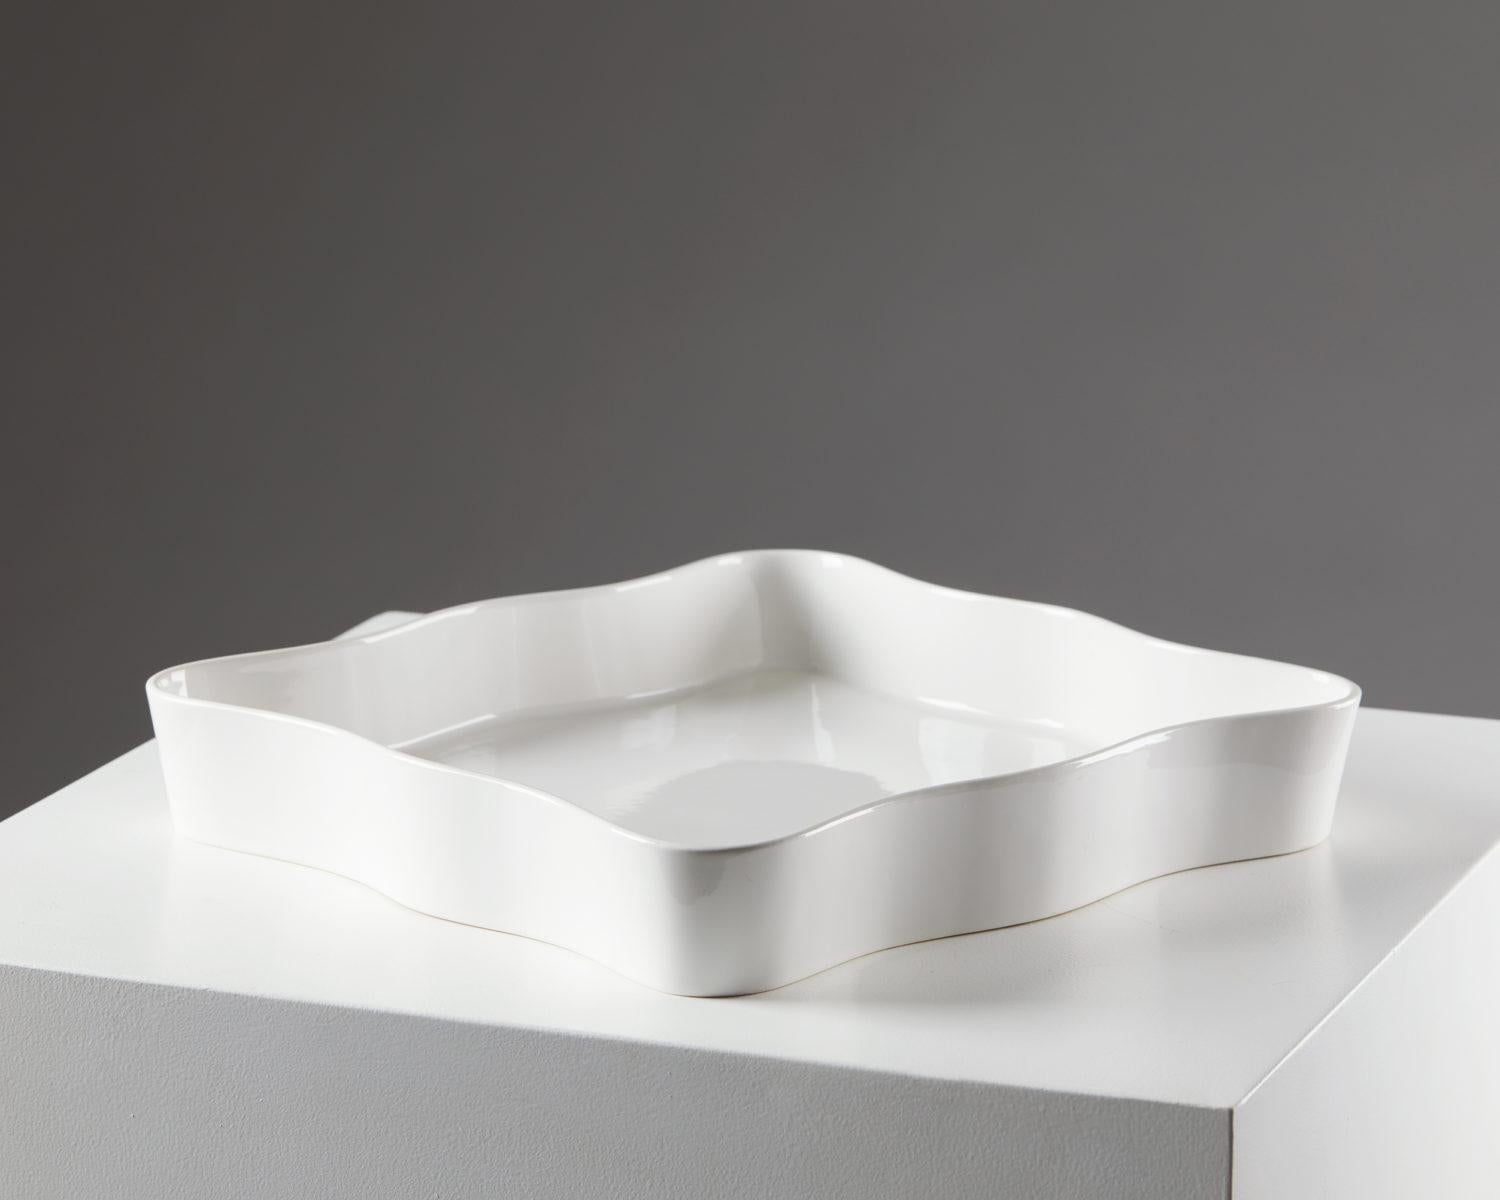 Dish designed by Pia Törnell “Pro Arte” for Rörstrand,
Sweden, 1996.

Porcelain.

Signed. 

Dimensions: 
W: 29.5 cm / 11 3/5